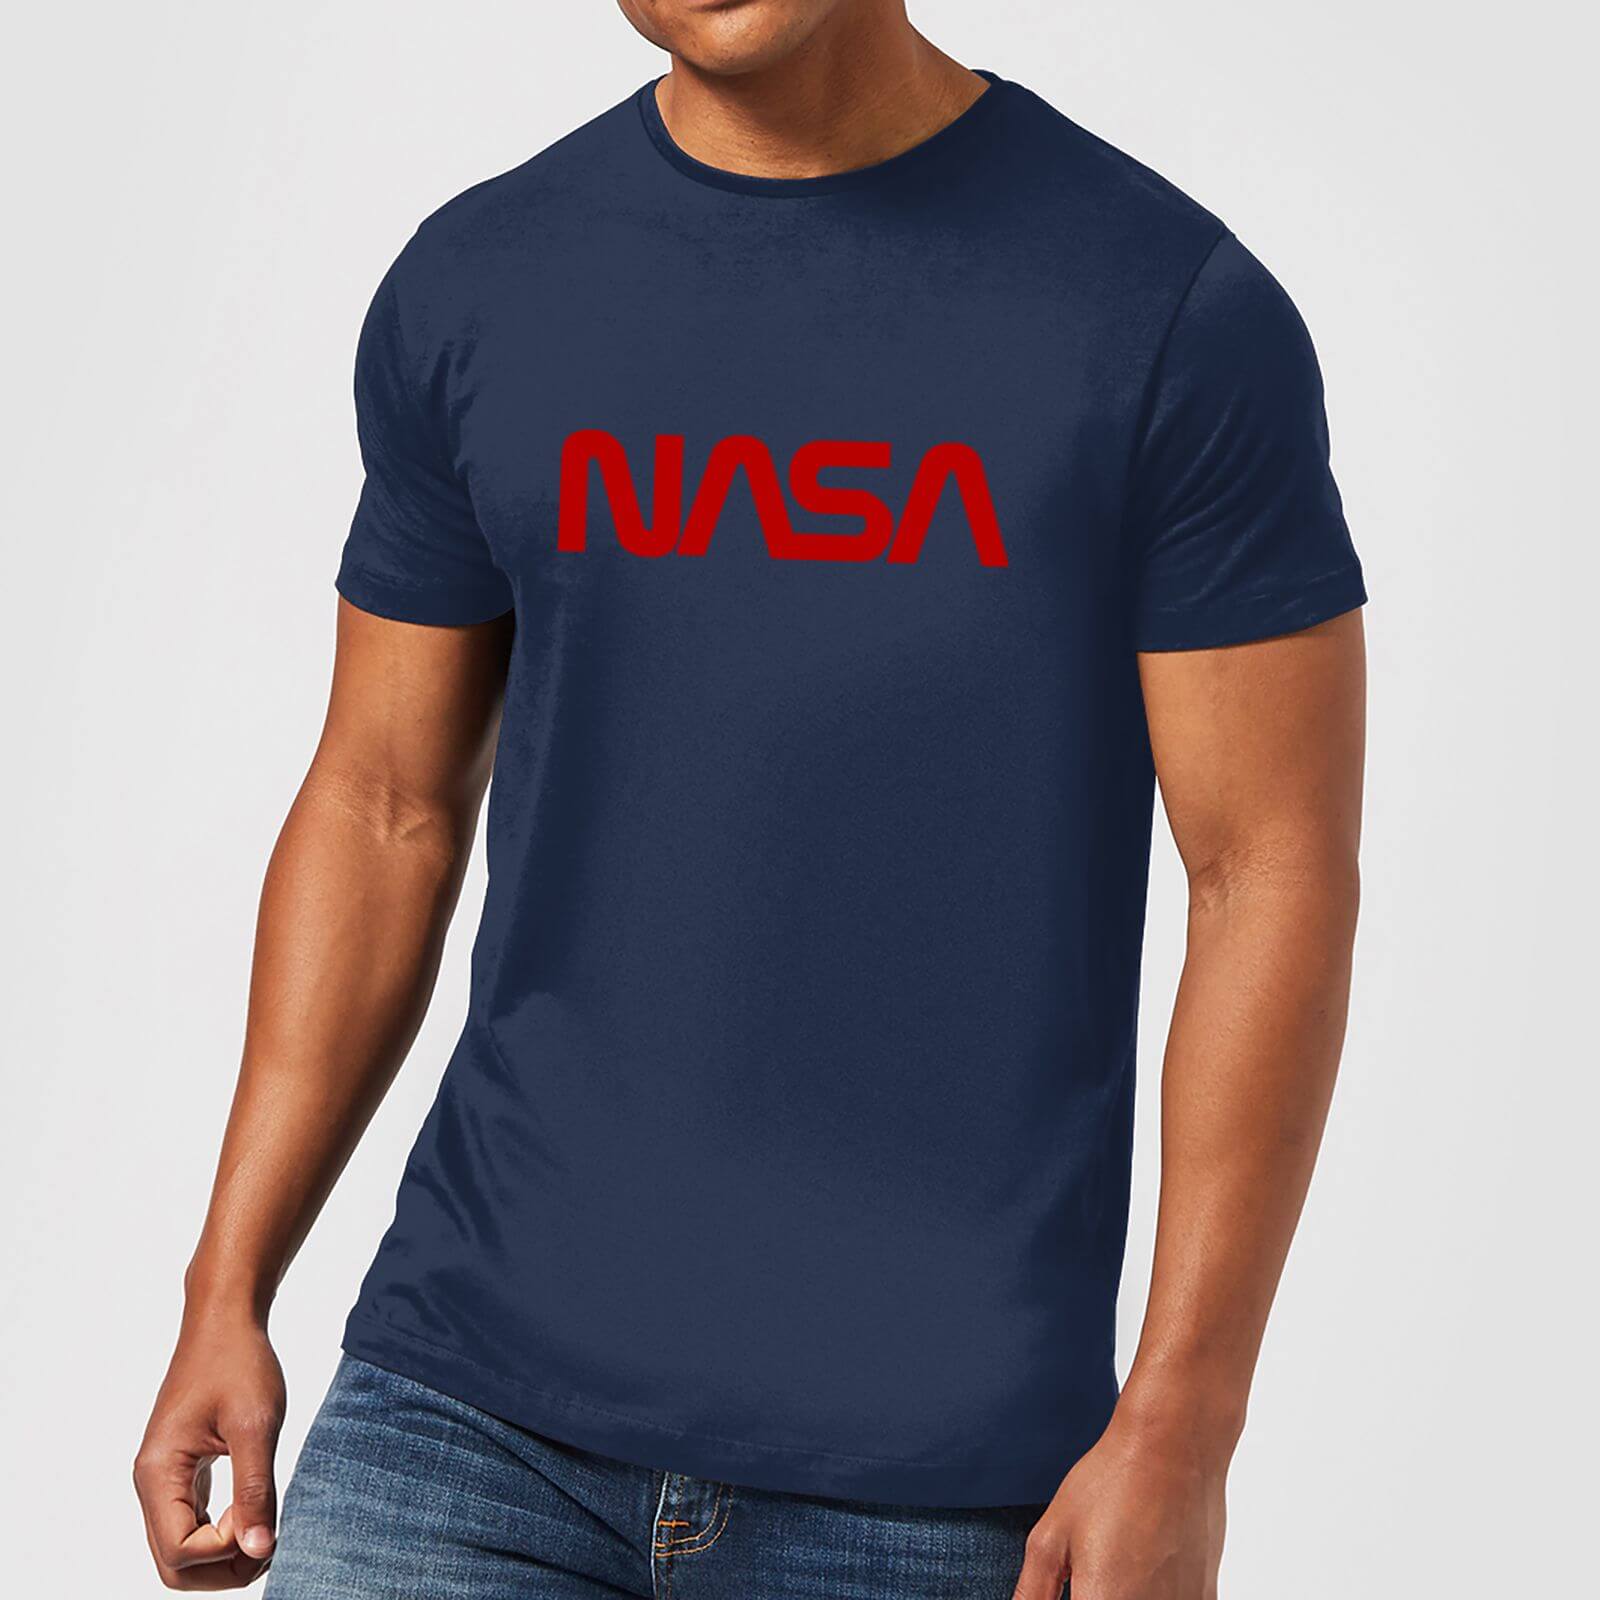 NASA Worm Red Logotype T-Shirt - Navy - XL